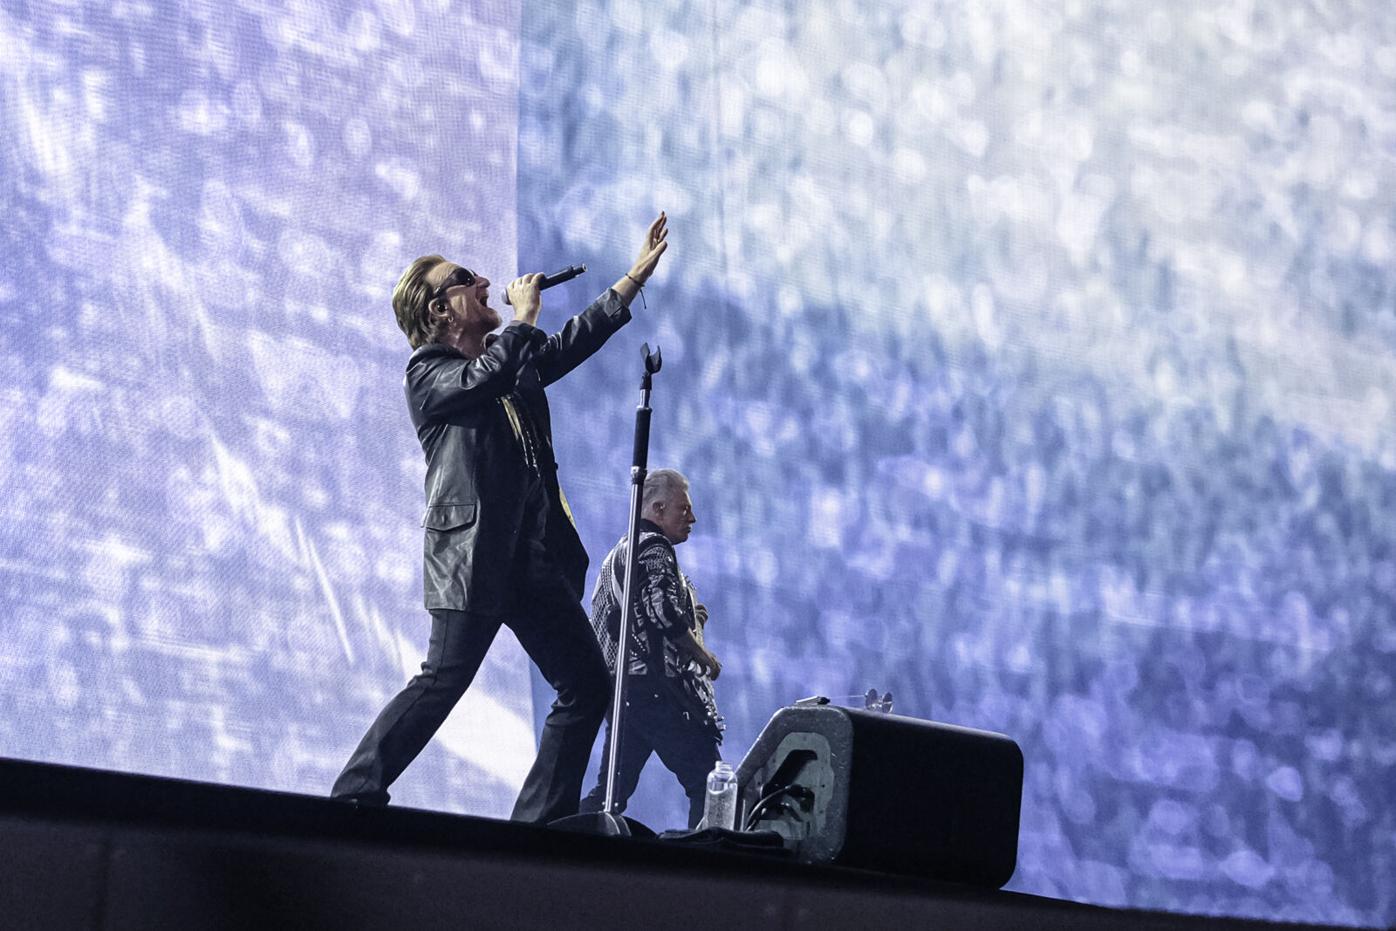 U2 concert uses stunning visuals to open massive Sphere venue in Las Vegas, AP Entertainment